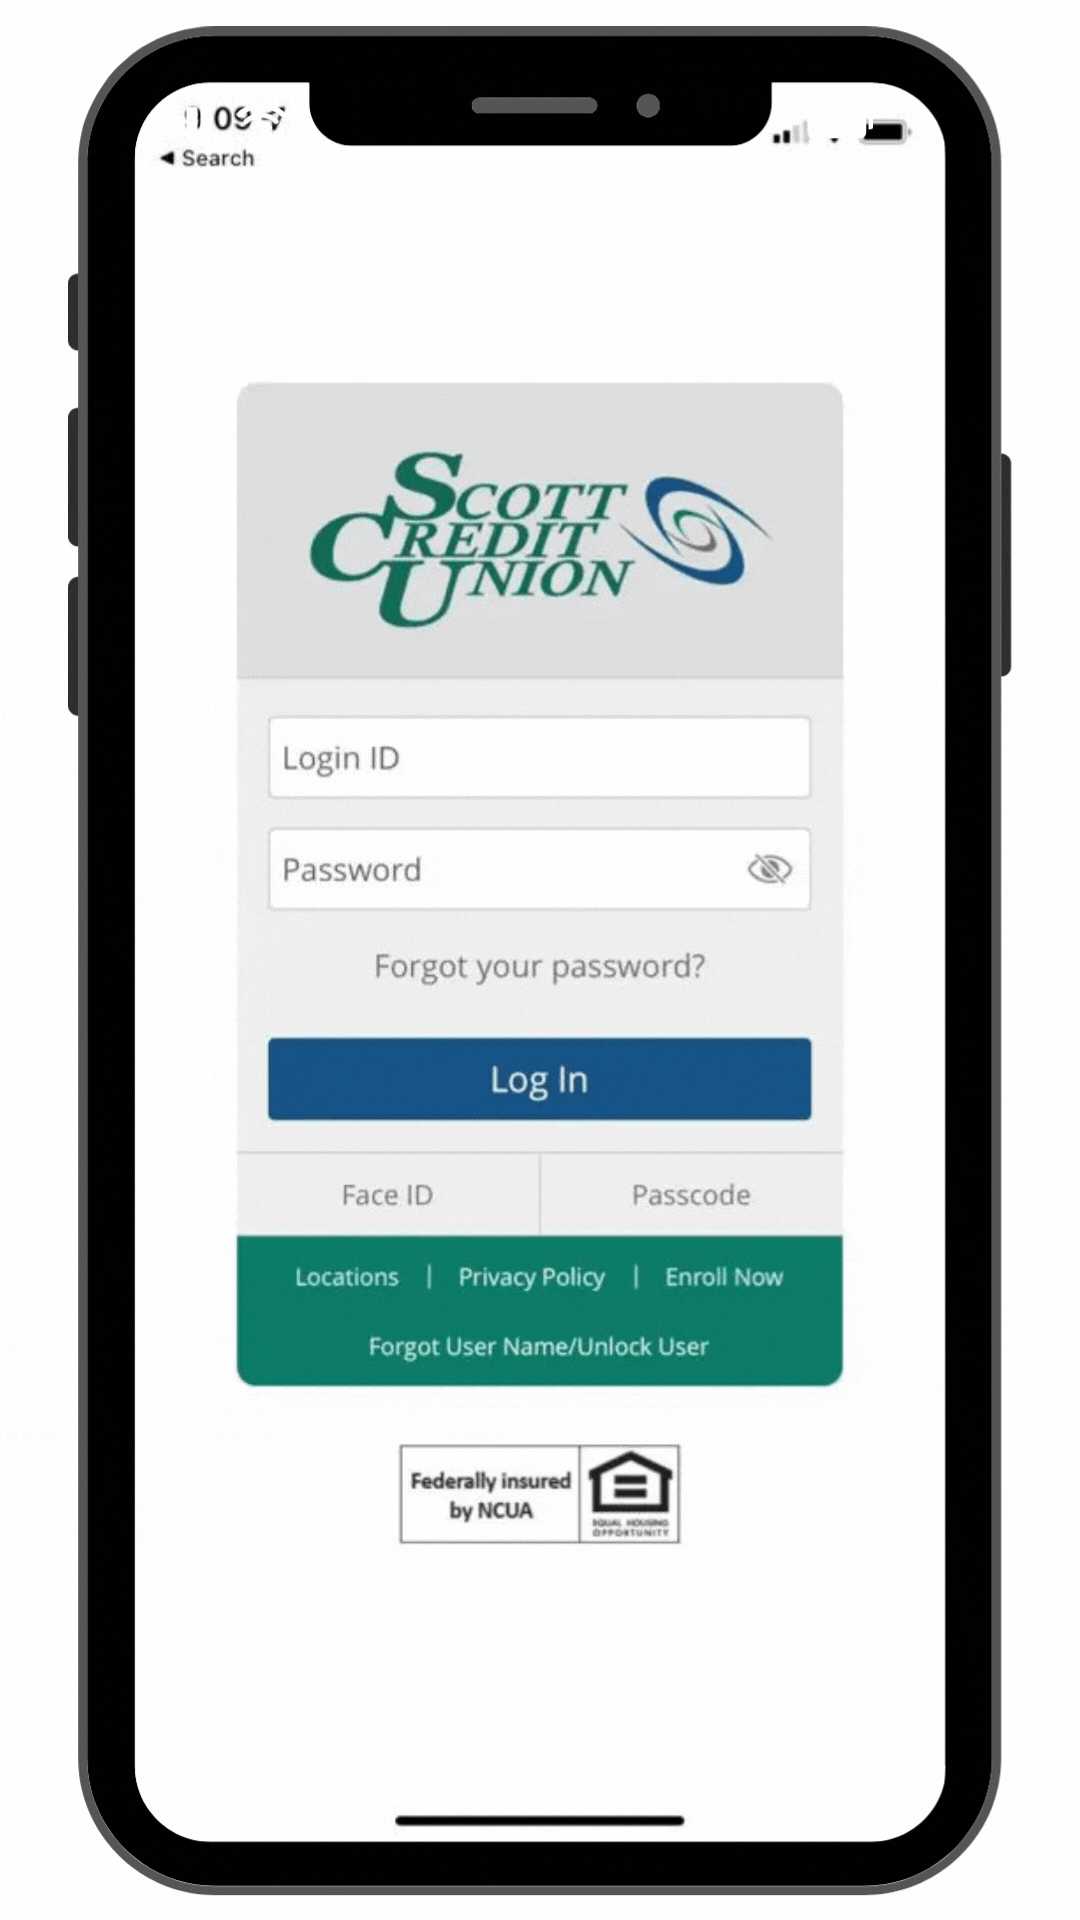 SCU Mobile Banking App screens